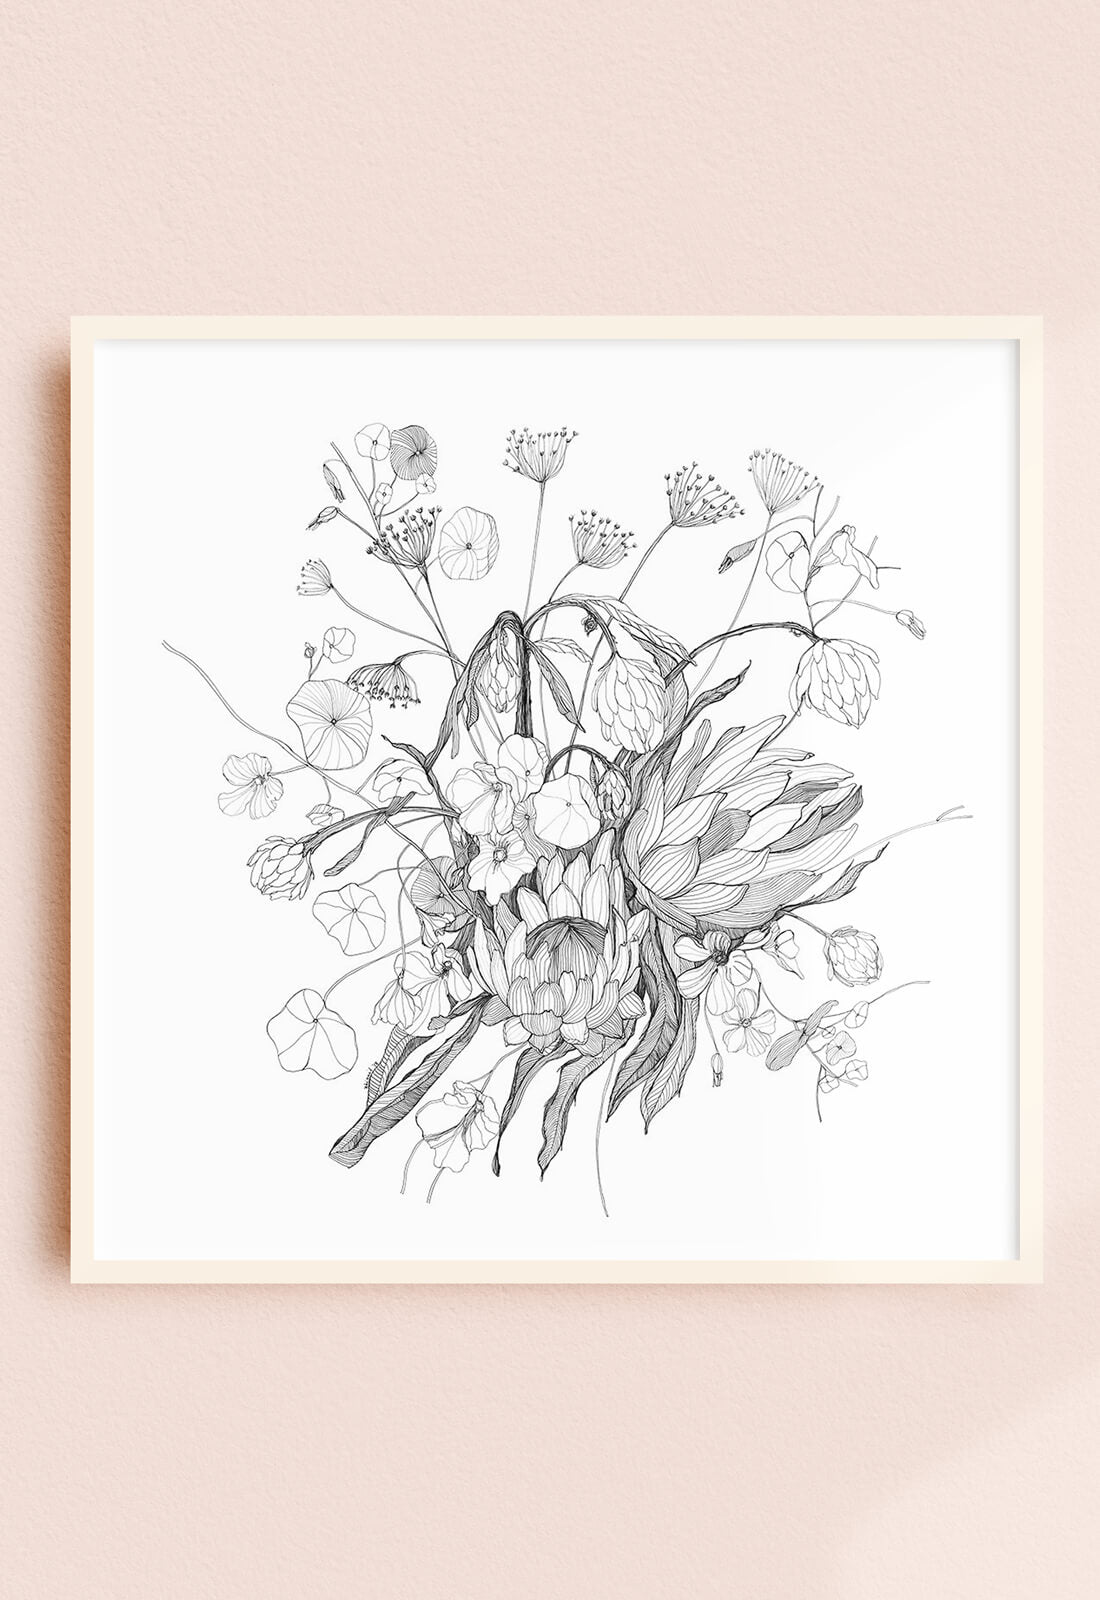 Hand Drawn Botanical Illustration Print - Protea and Nasturtiums Bouquet - 12x12